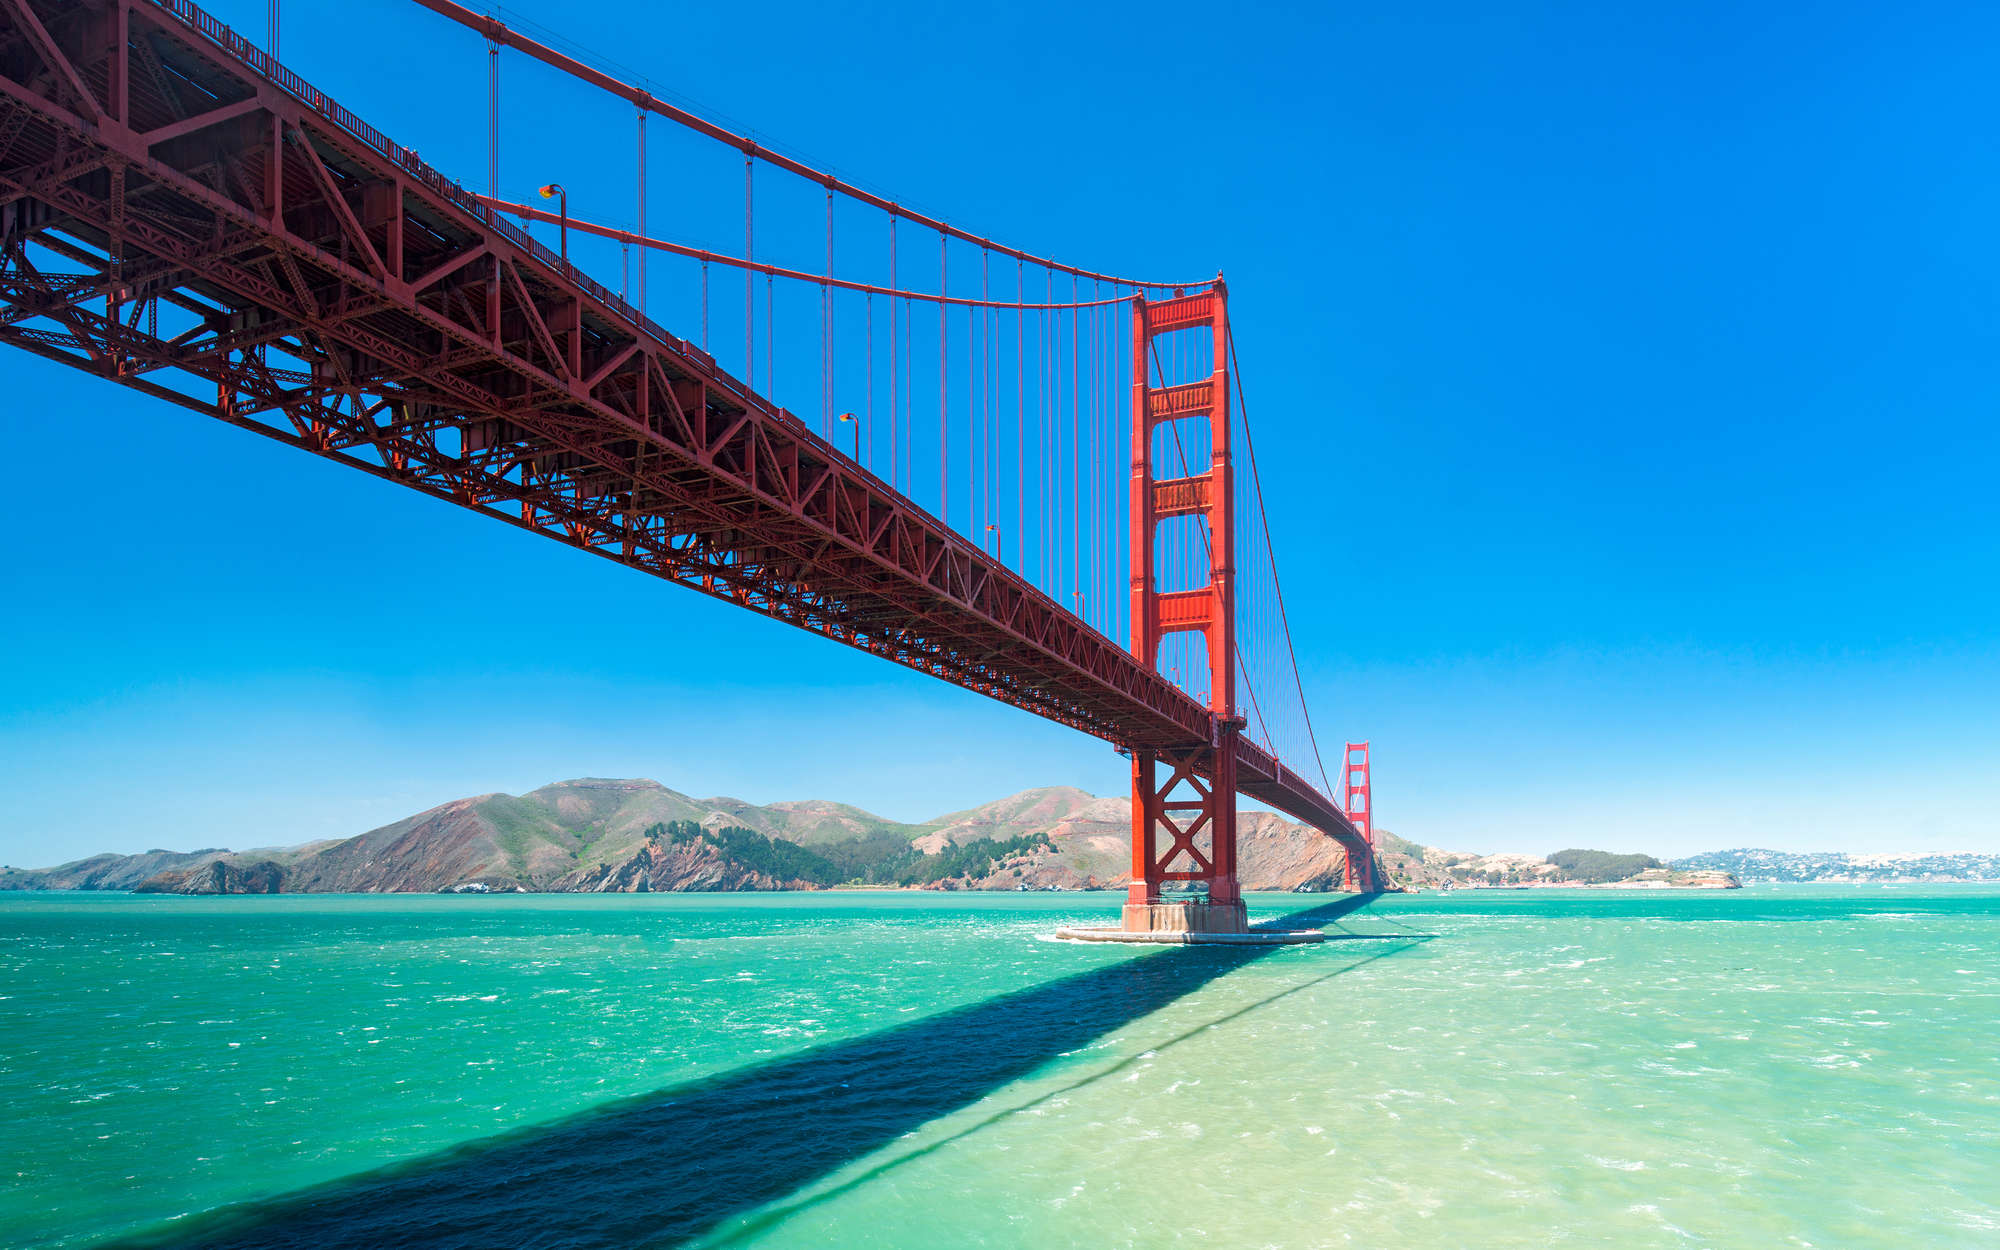             Mural Golden Gate Bridge en San Francisco - No tejido liso mate
        